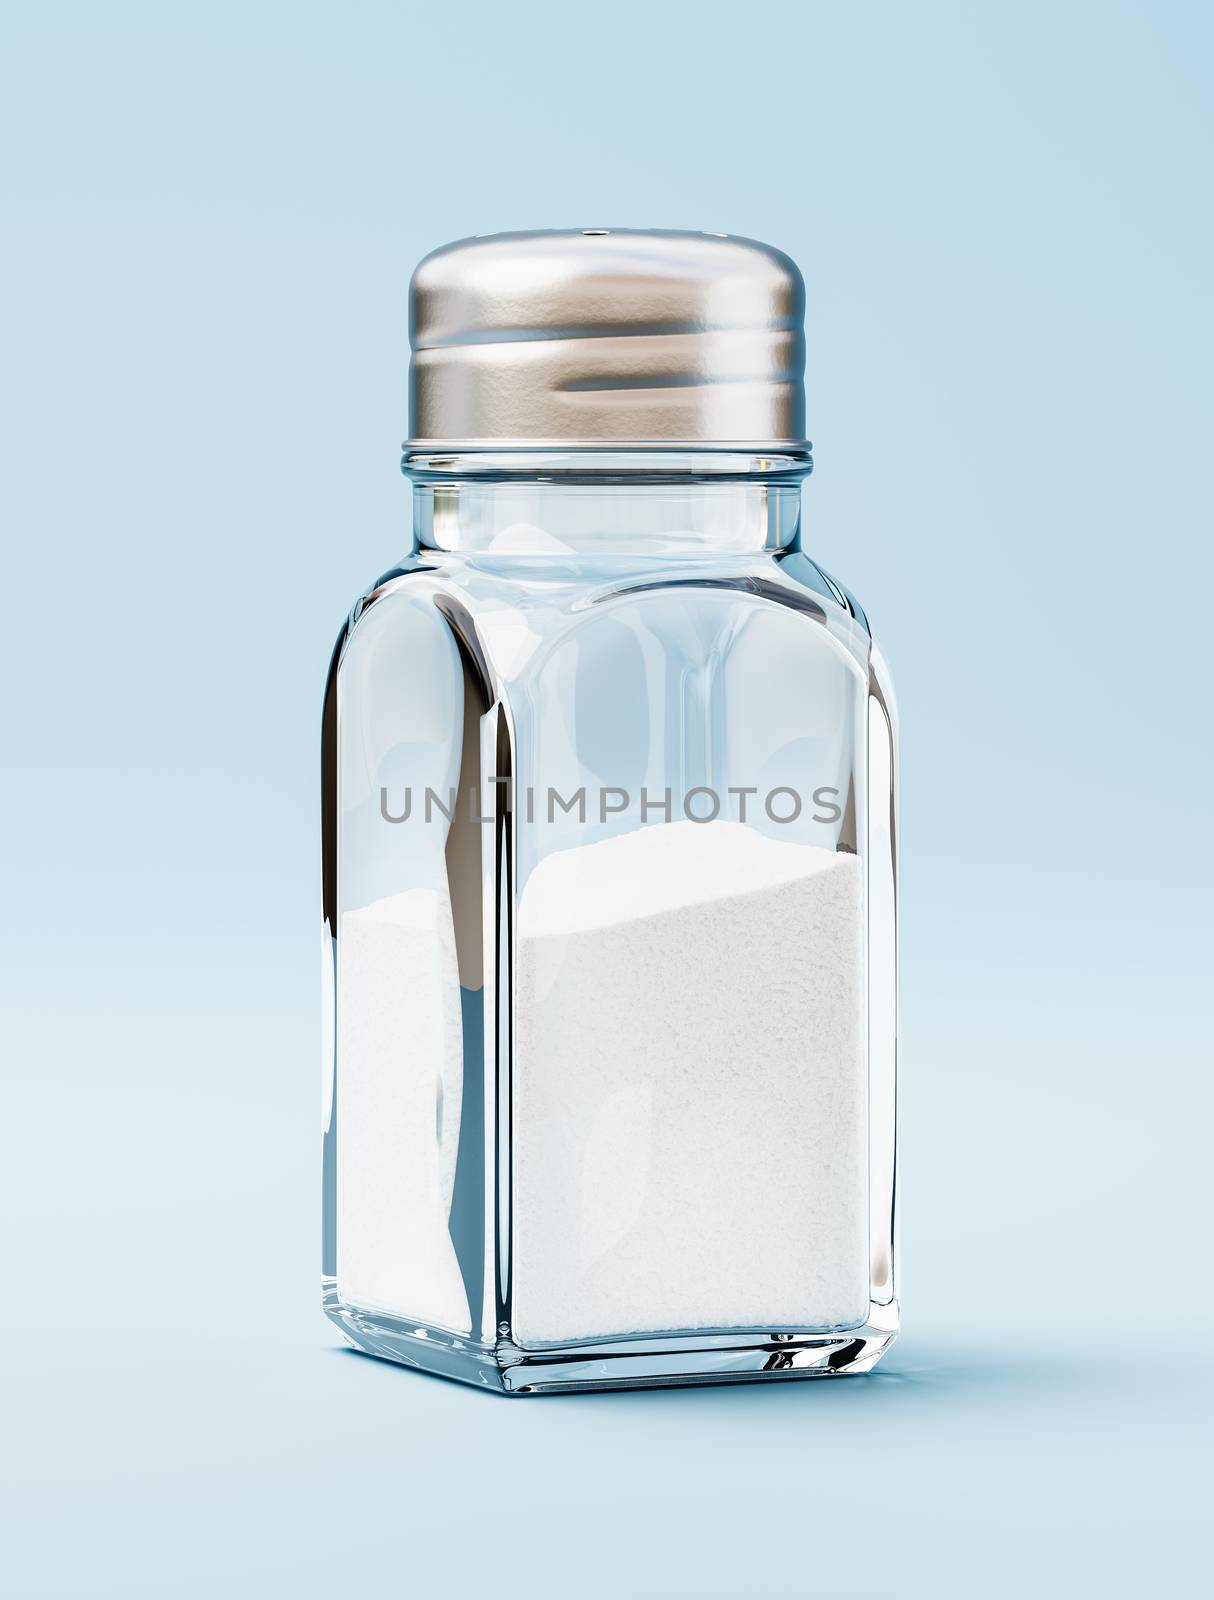 Salt in a Glassy Salt Shaker with Metallic Screw Cap on Blue Background 3D Illustration